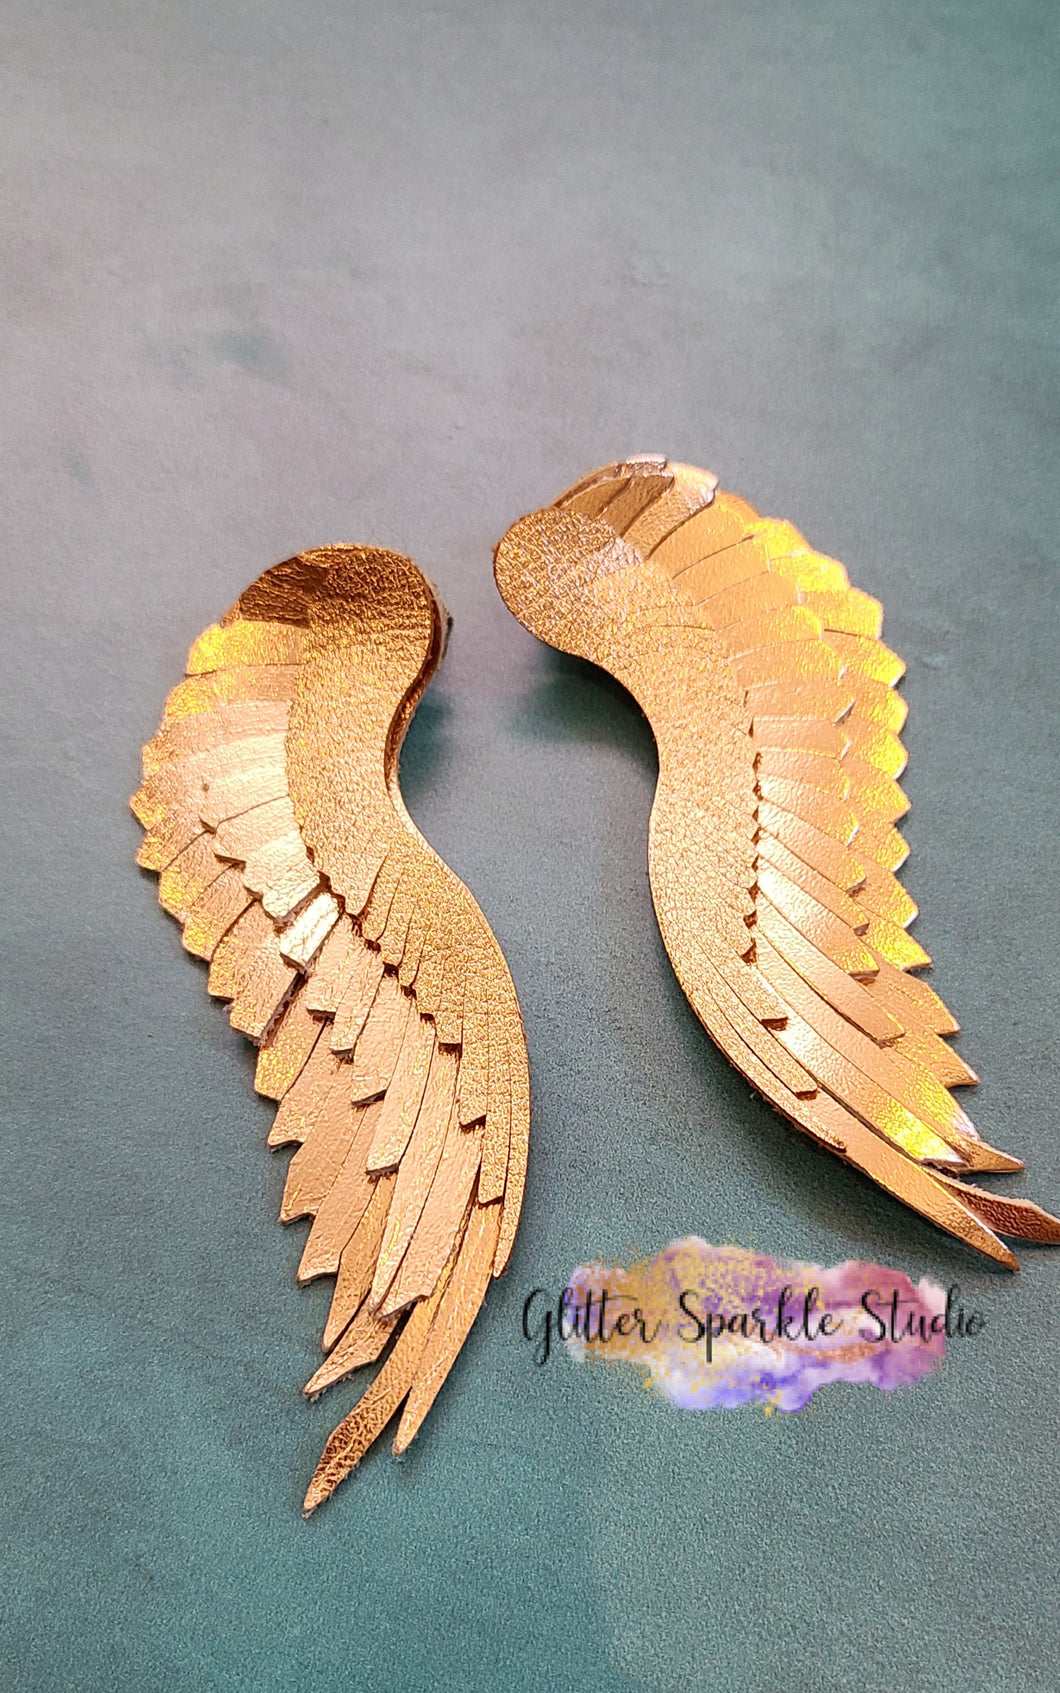 Triple Layer 4 inch Angel Wings Fringe Feathers Earring or Pendant Steel Rule Combo Die